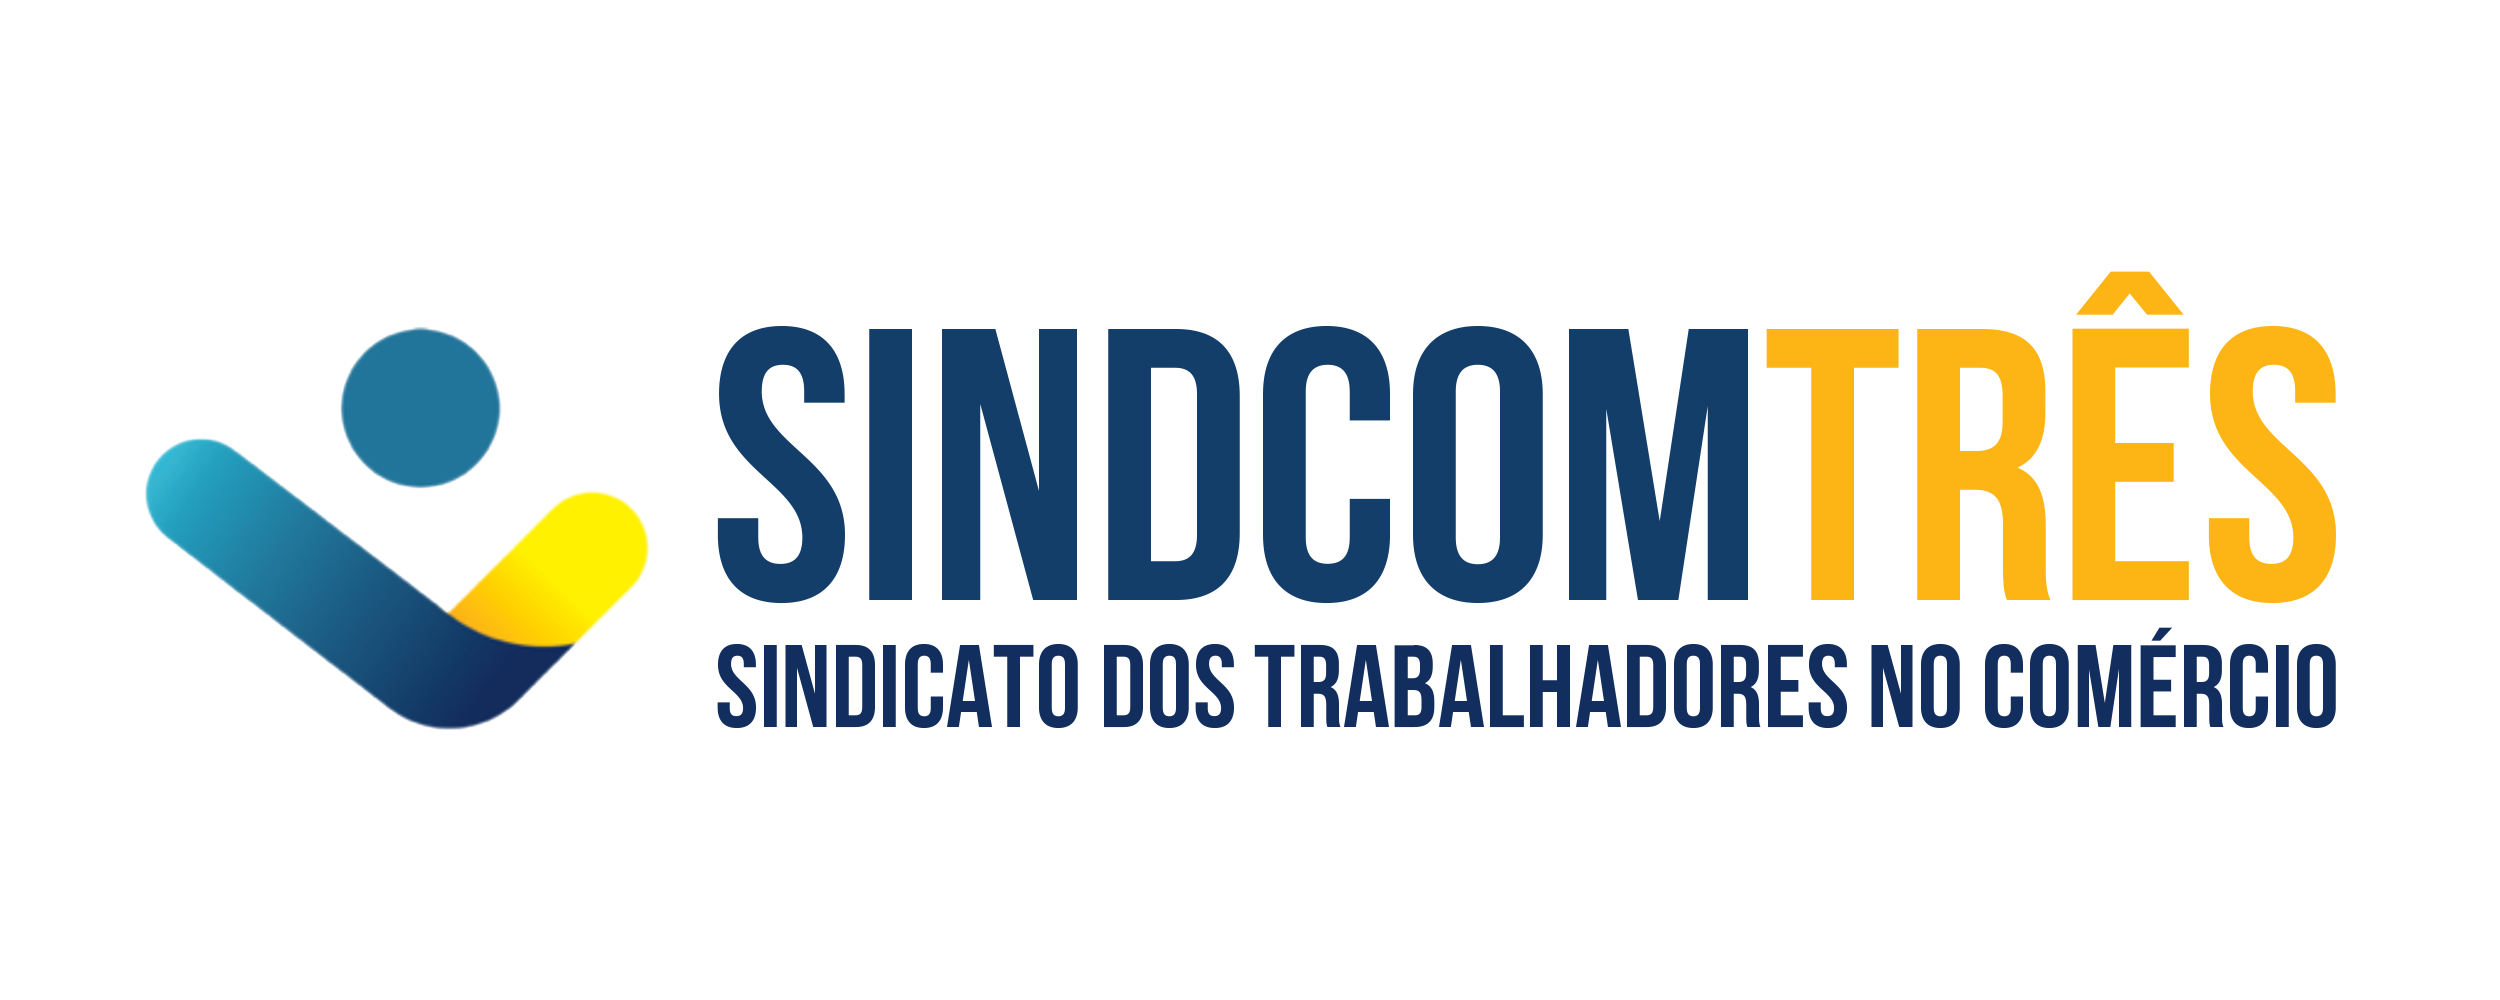 SINDCOMTRES HORIZONTAL.png